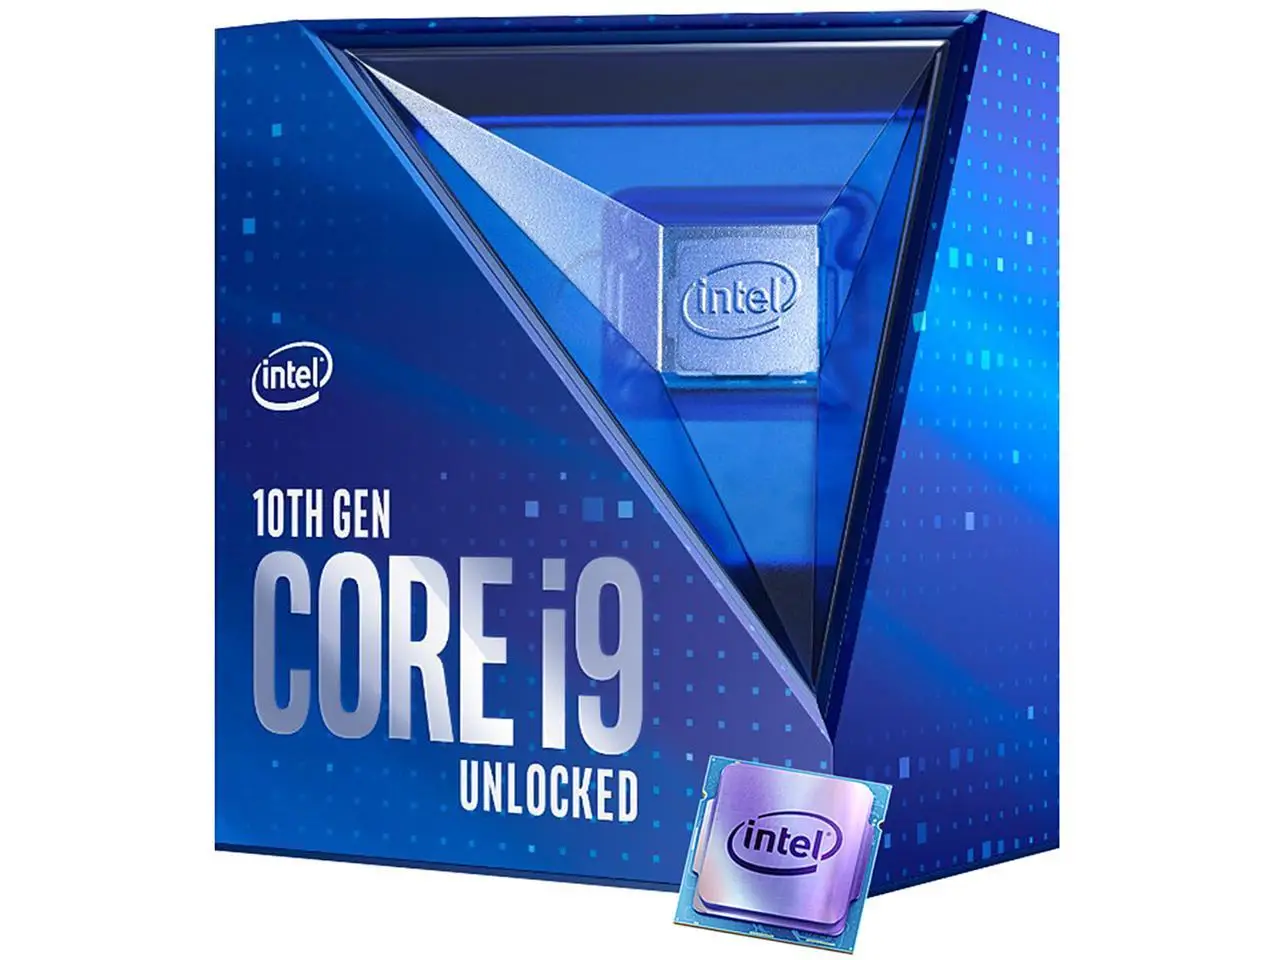 Core i9-10900K 10-Core 3.7 GHz LGA 1200 125W BX8070110900K Desktop Processor UHD Graphics 630